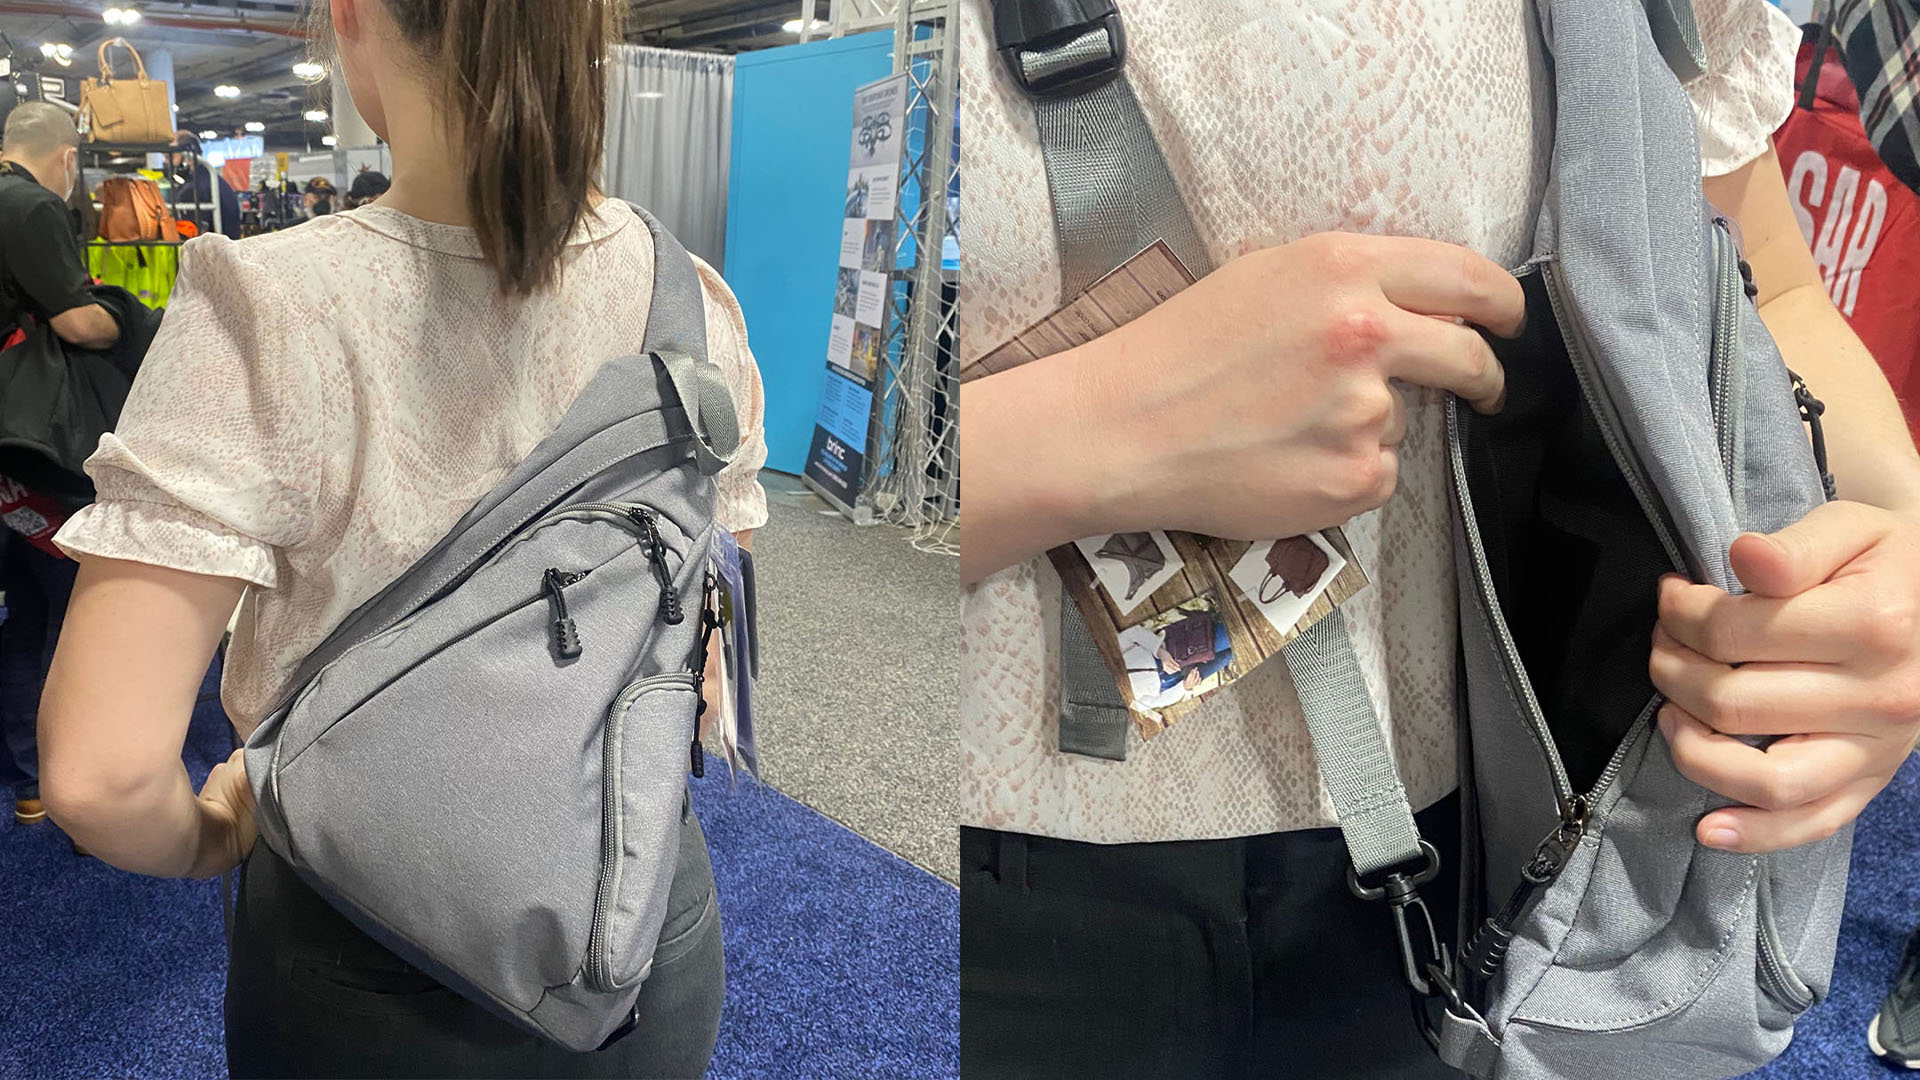 Anti-Thief Hidden Underarm Shoulder Bag, Concealed Pack Pocket,  Multi-Purpose Men/Women Safety Double Storage